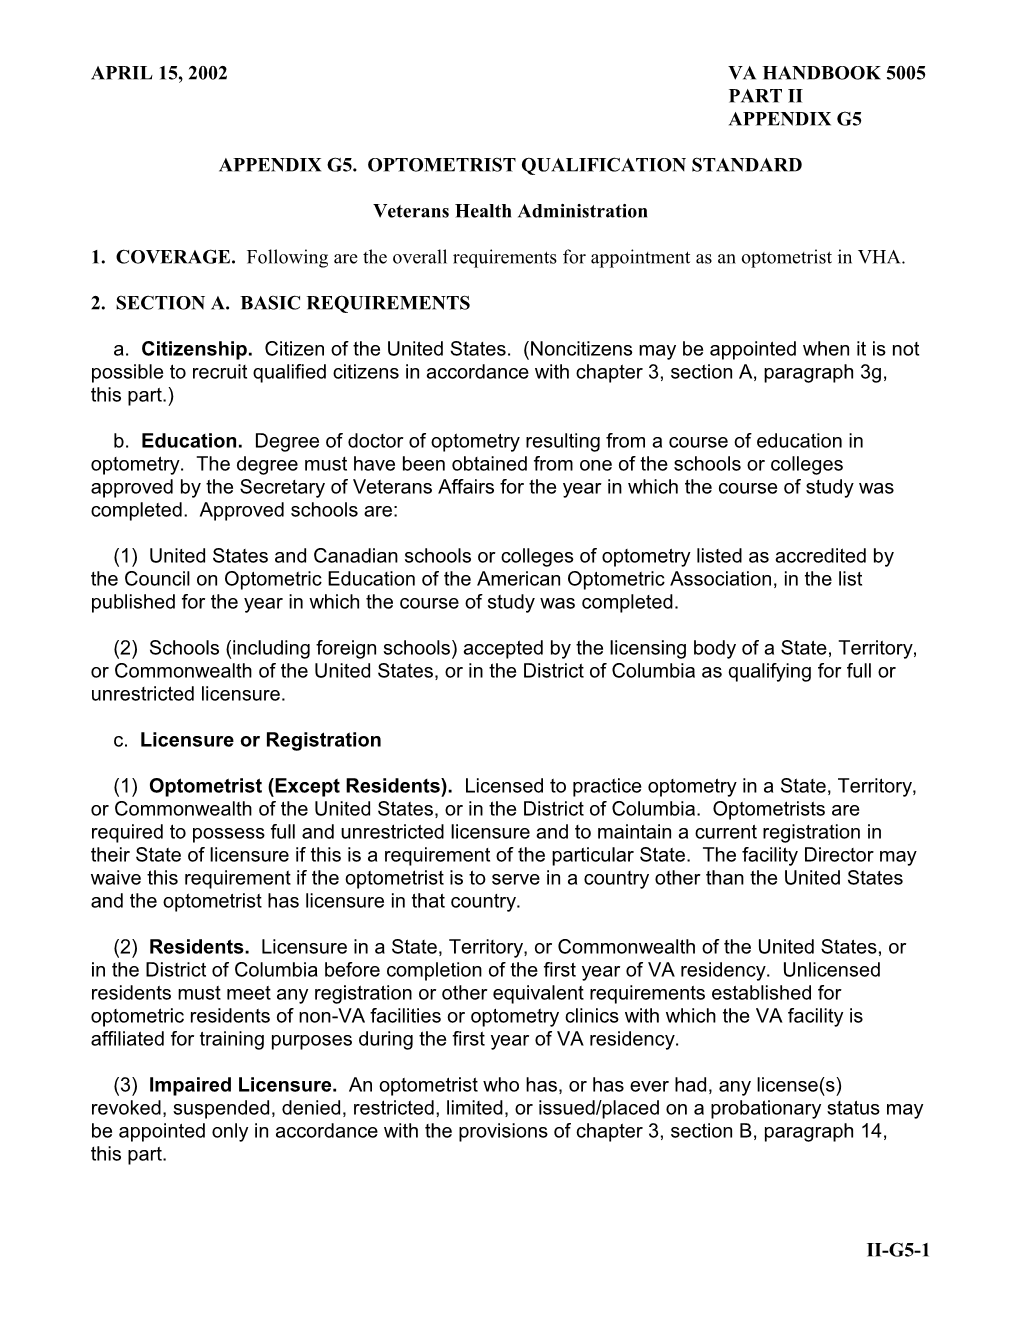 Appendix G5. Optometrist Qualification Standard